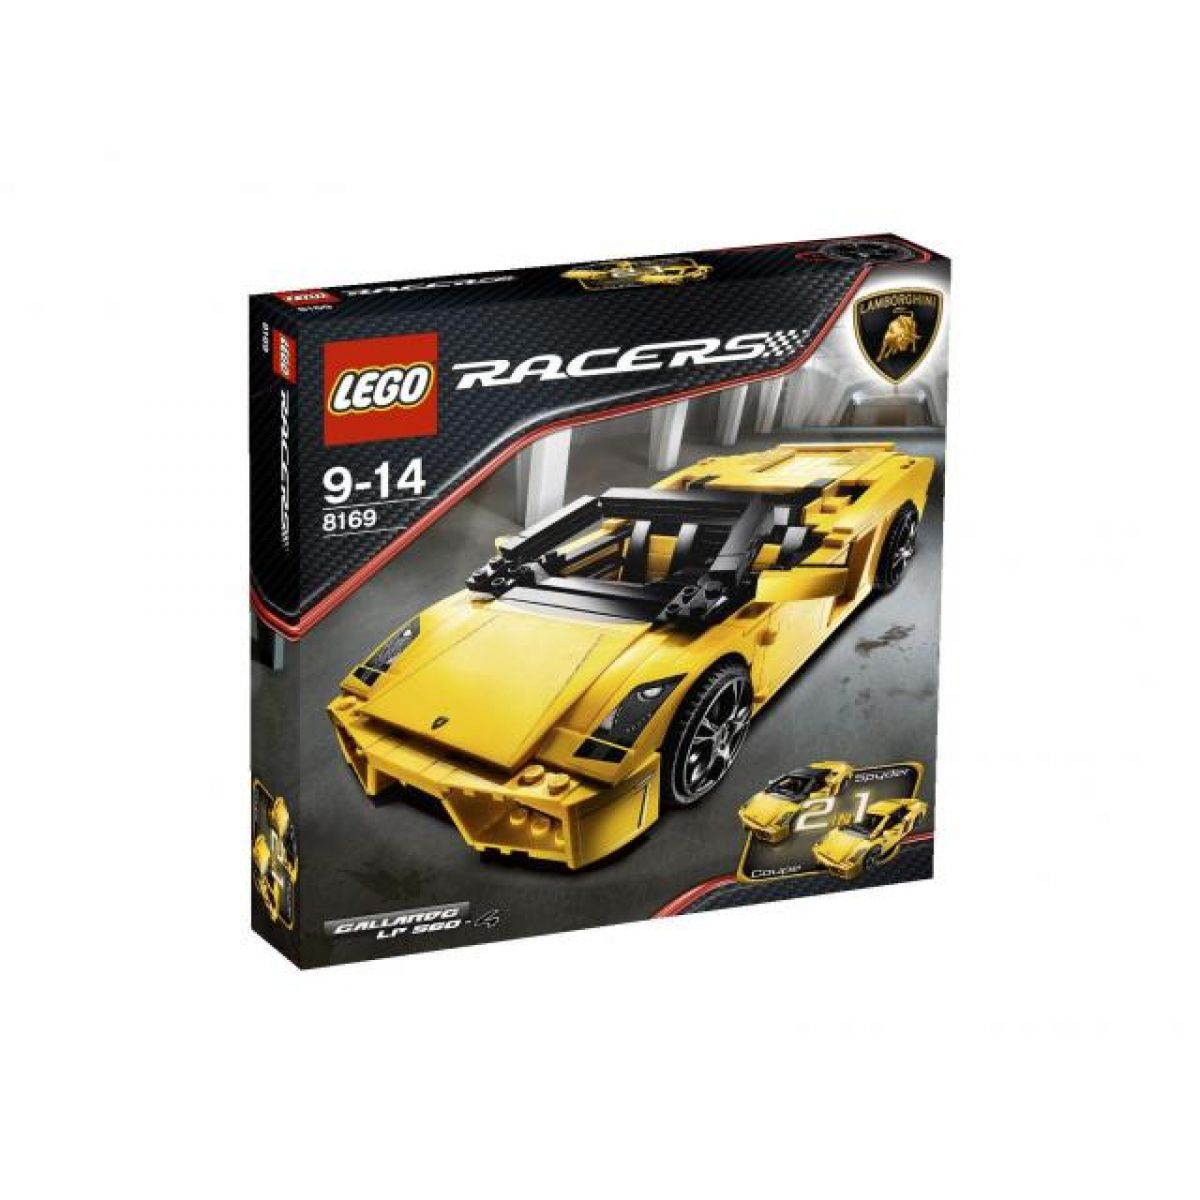 LEGO RACERS 8169 Lamborghini Gallardo LP560-4